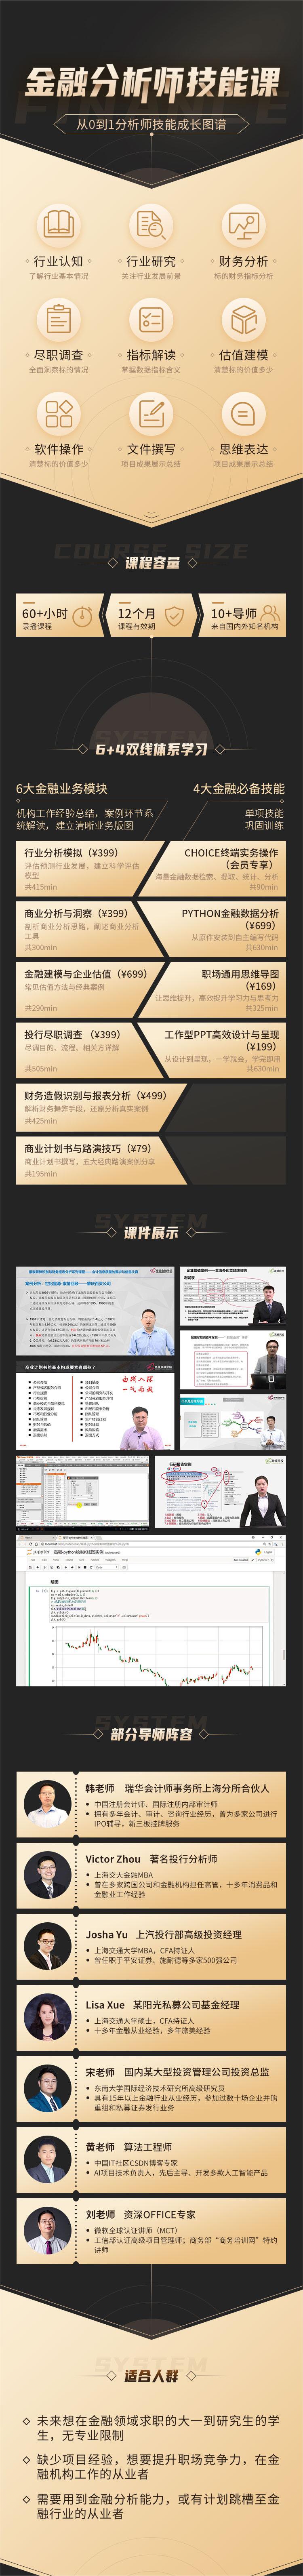 https://simg01.gaodunwangxiao.com/uploadfiles/product-center/202211/11/417bb_20221111152452.jpg